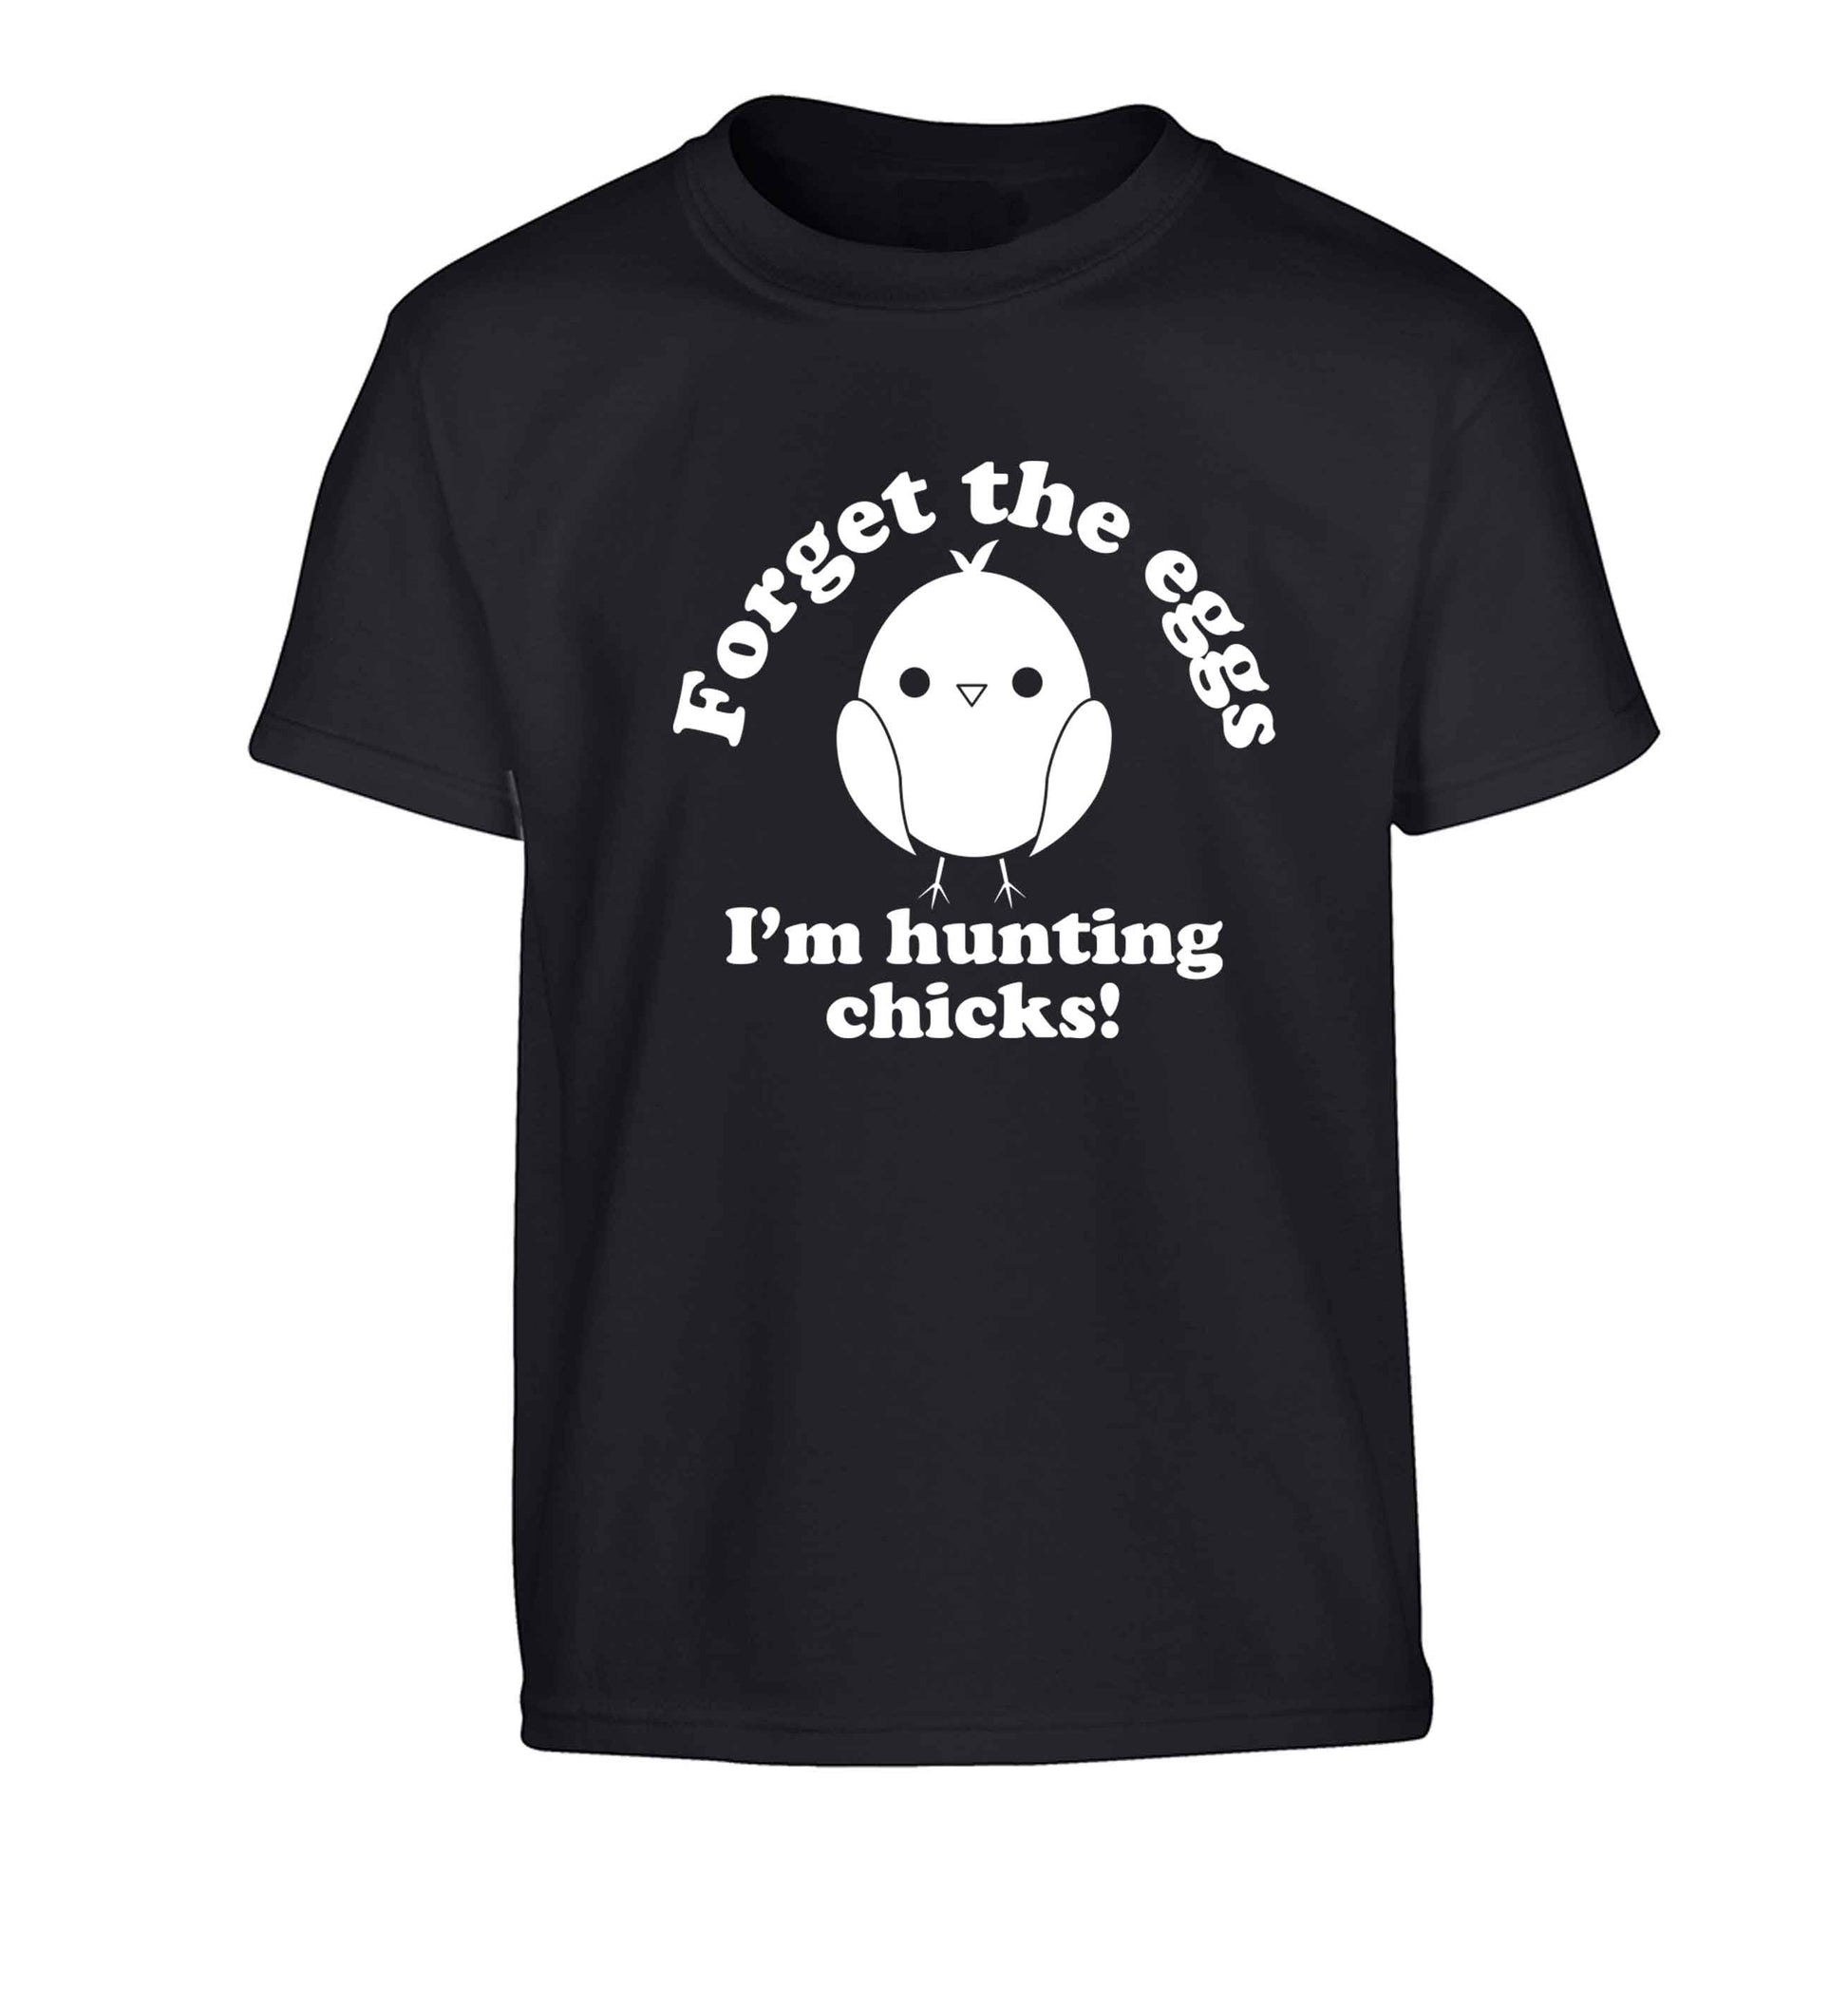 Forget the eggs I'm hunting chicks! Children's black Tshirt 12-13 Years